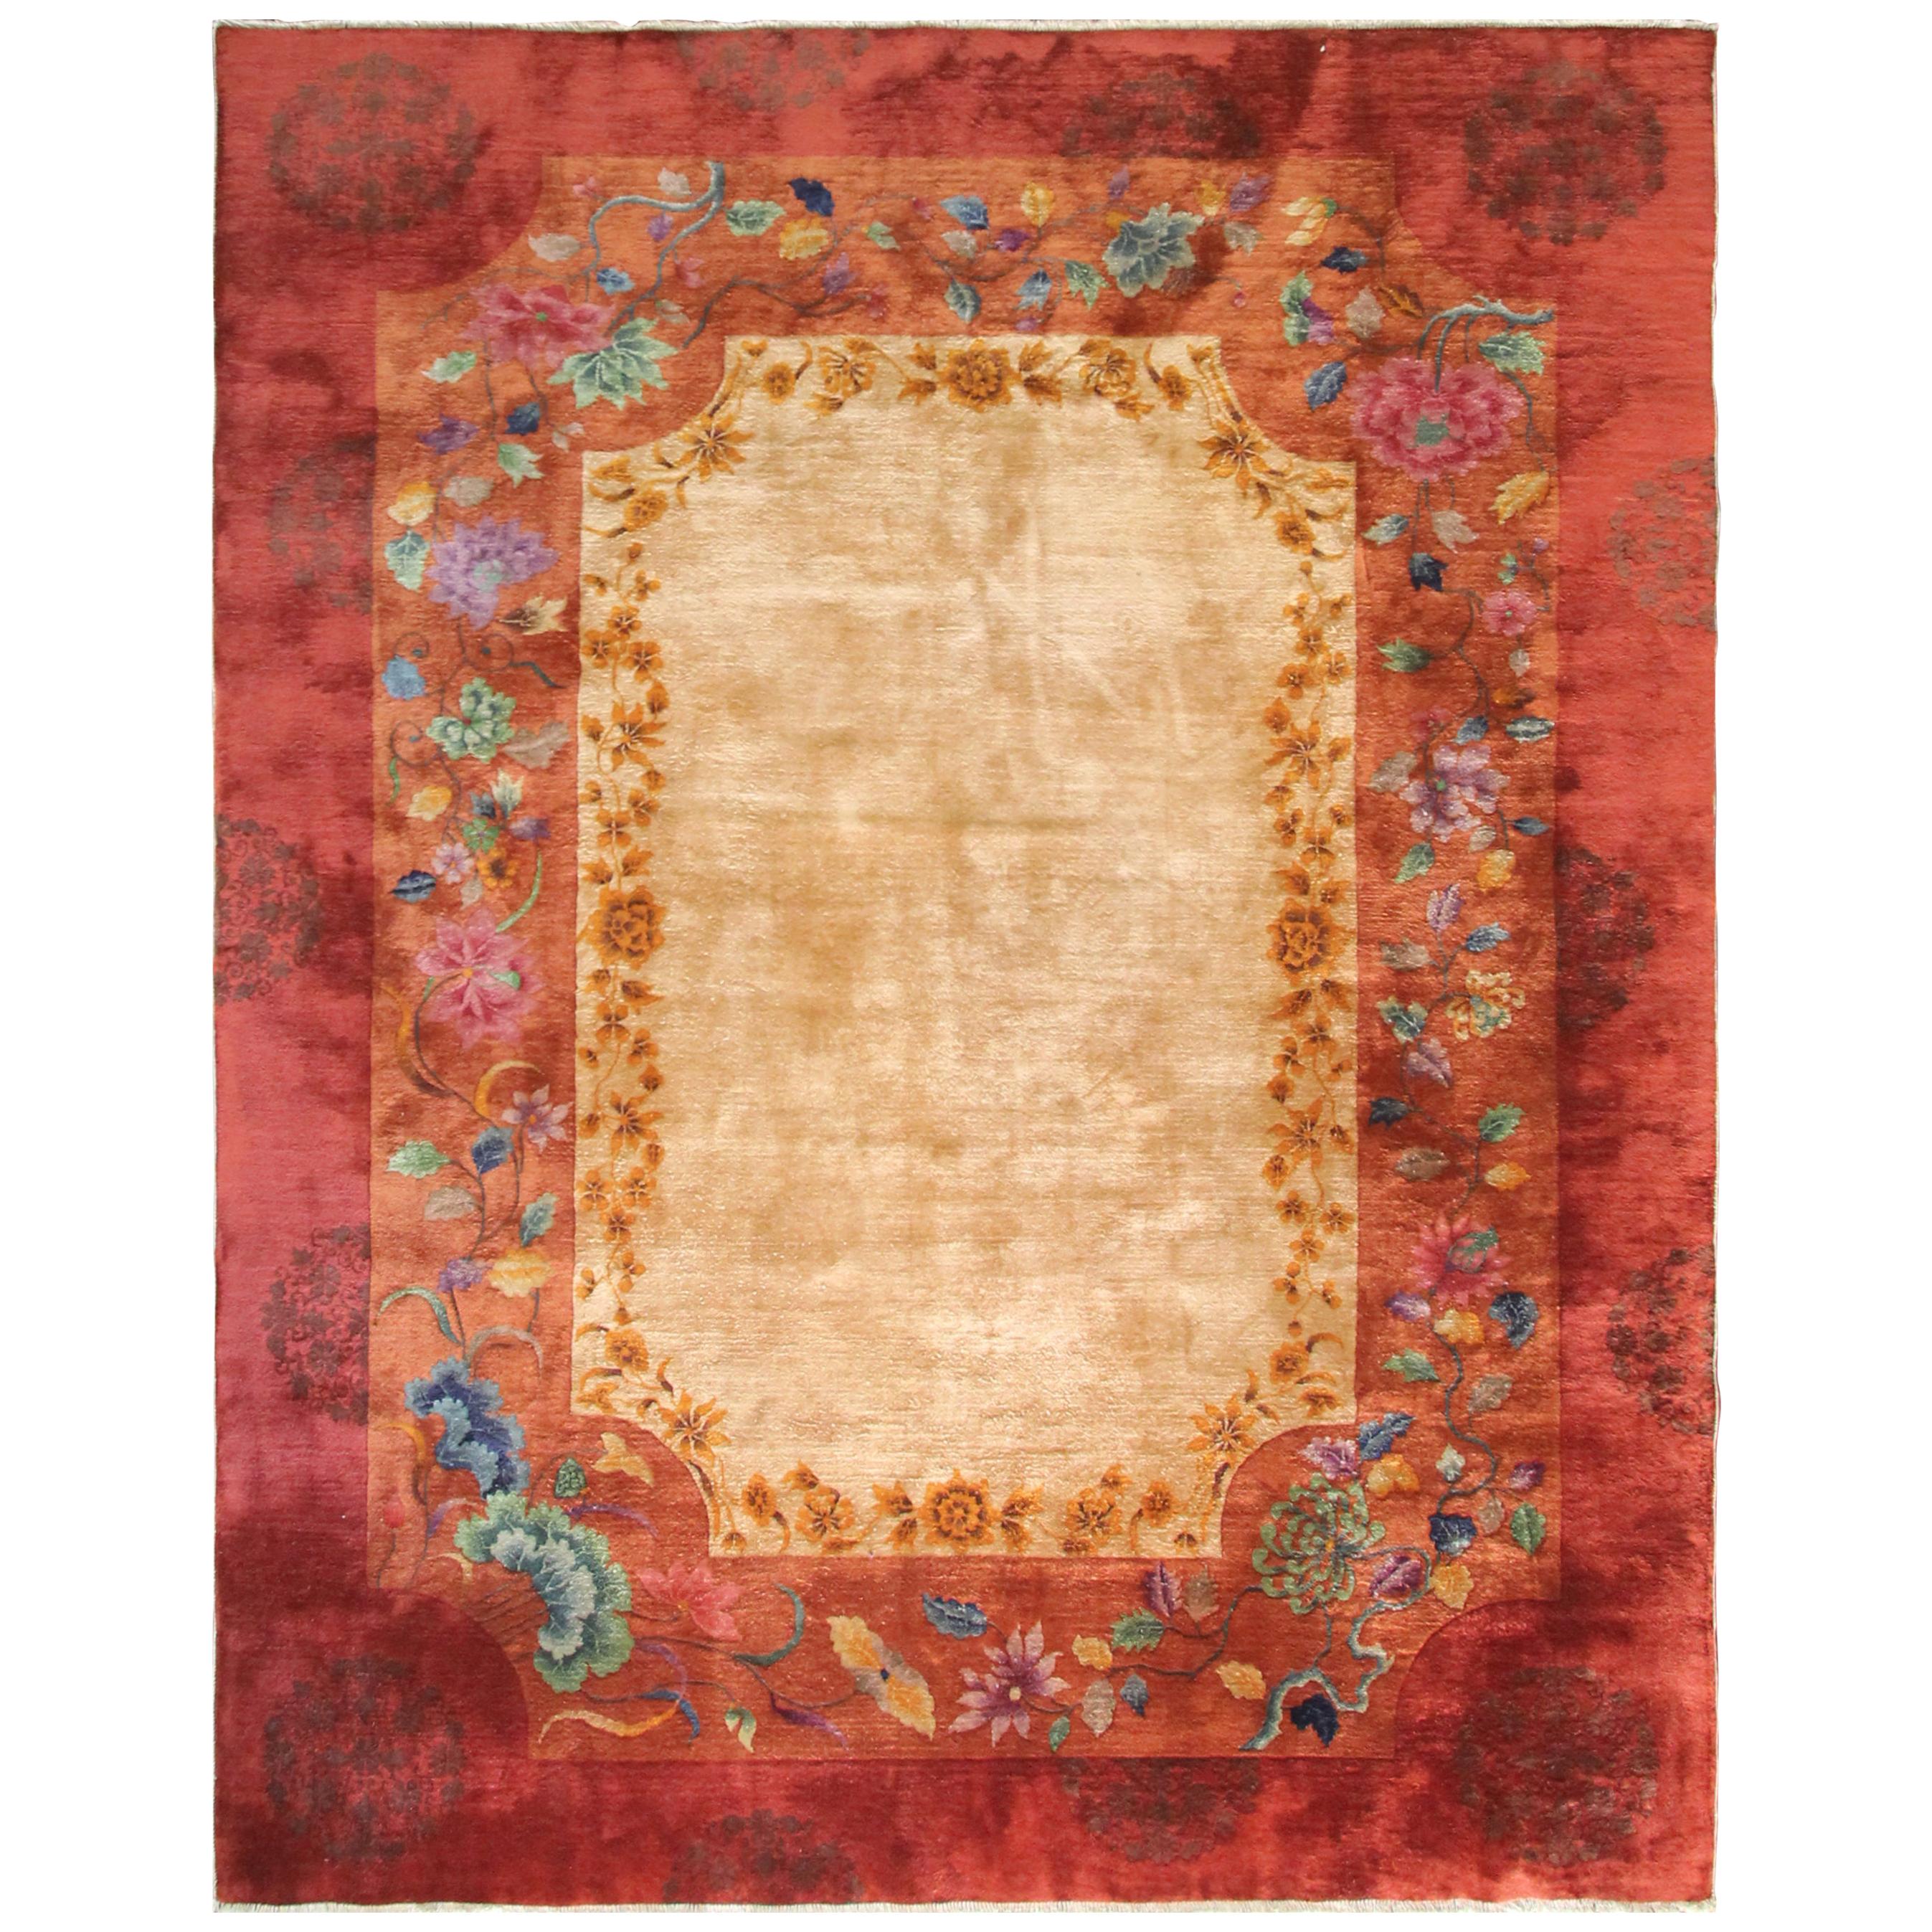 Antique Art Deco Chinese Carpet, Unusual, 8'10" x 11'6" For Sale